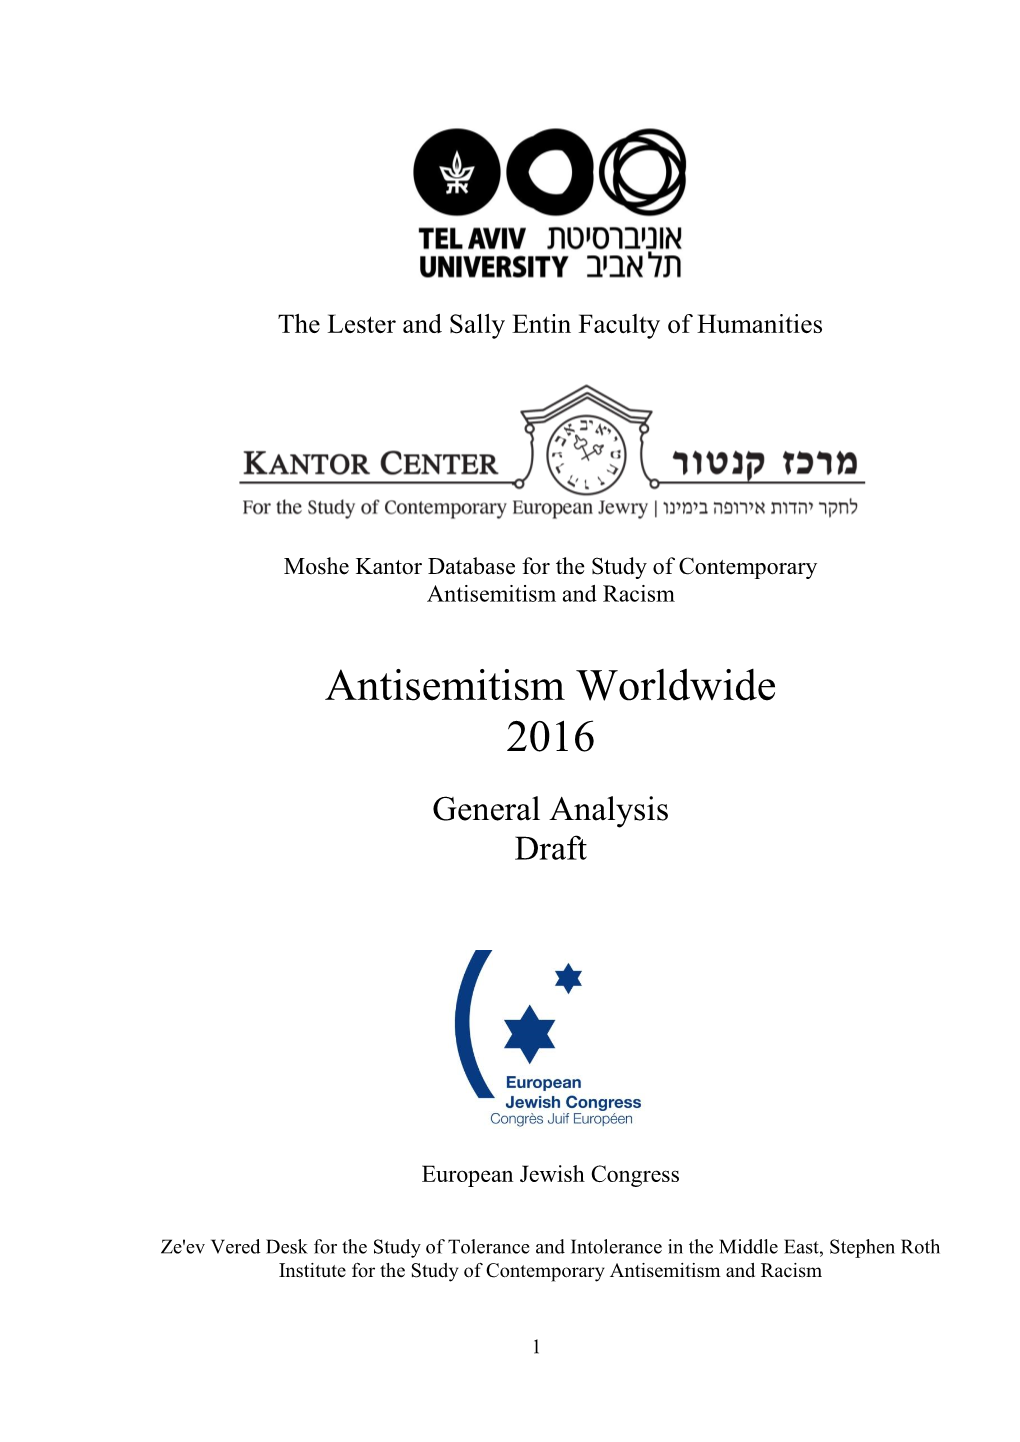 Antisemitism Worldwide 2016